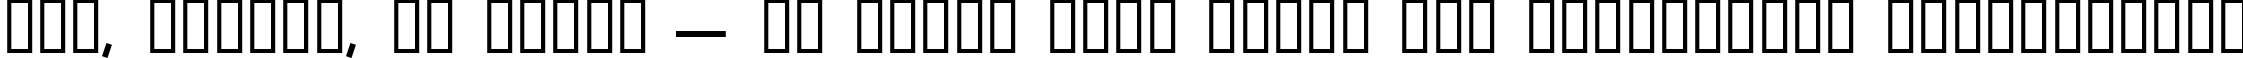 Пример написания шрифтом Watertown Bold текста на украинском